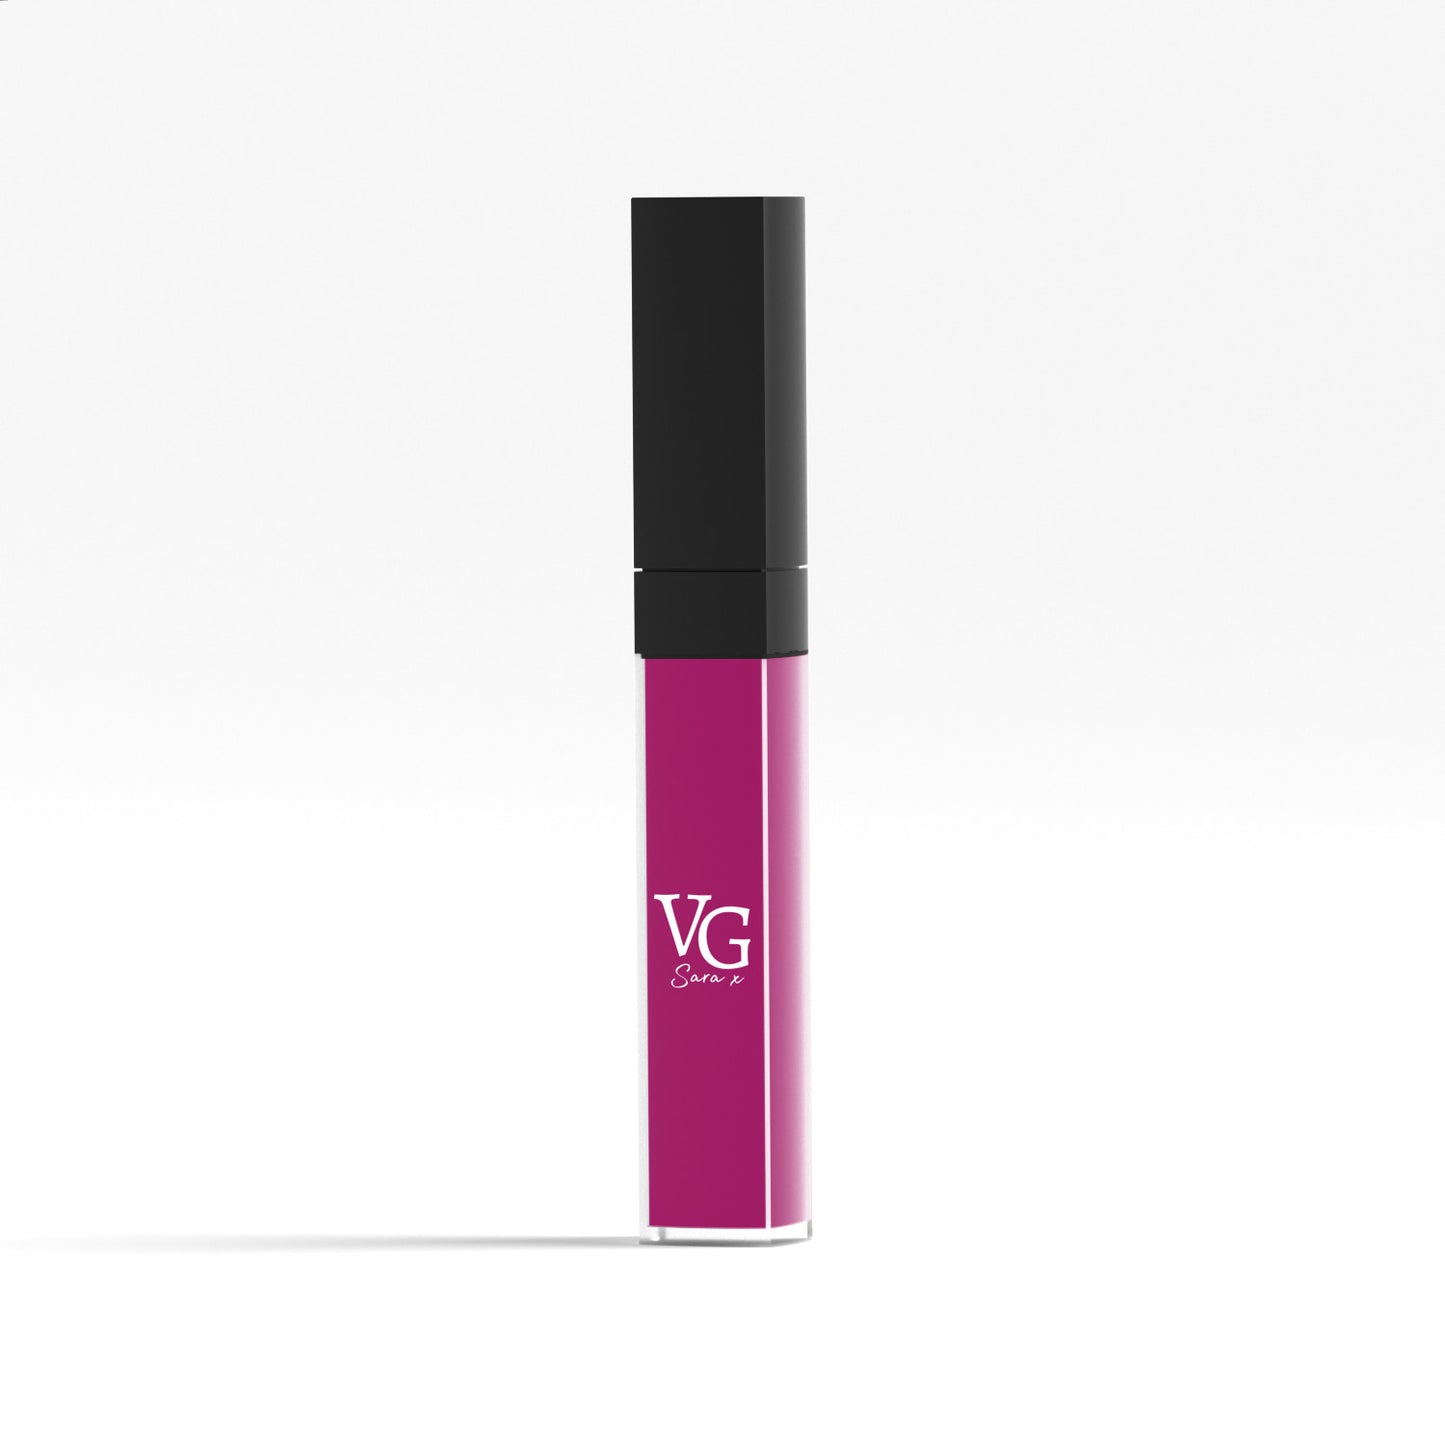 A single vegan liquid lipstick with the VG brand logo